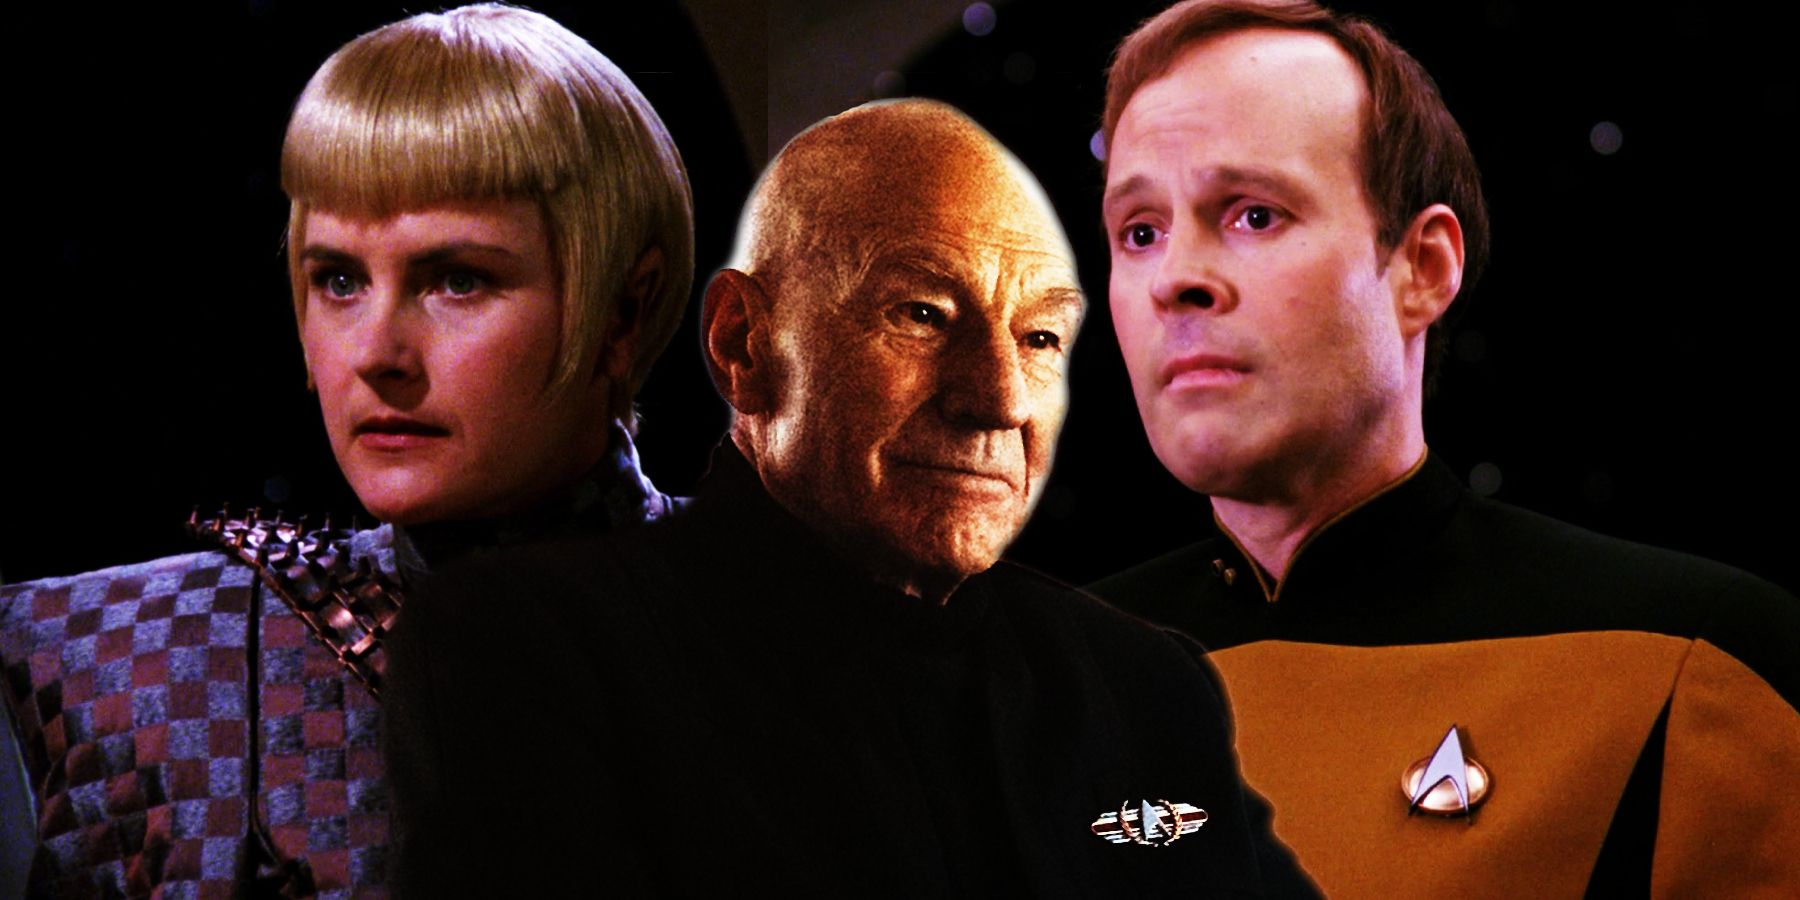 Denise Crosby as Sela, Patrick Stewart as Picard, and Dwight Schultz as Reg Barclay